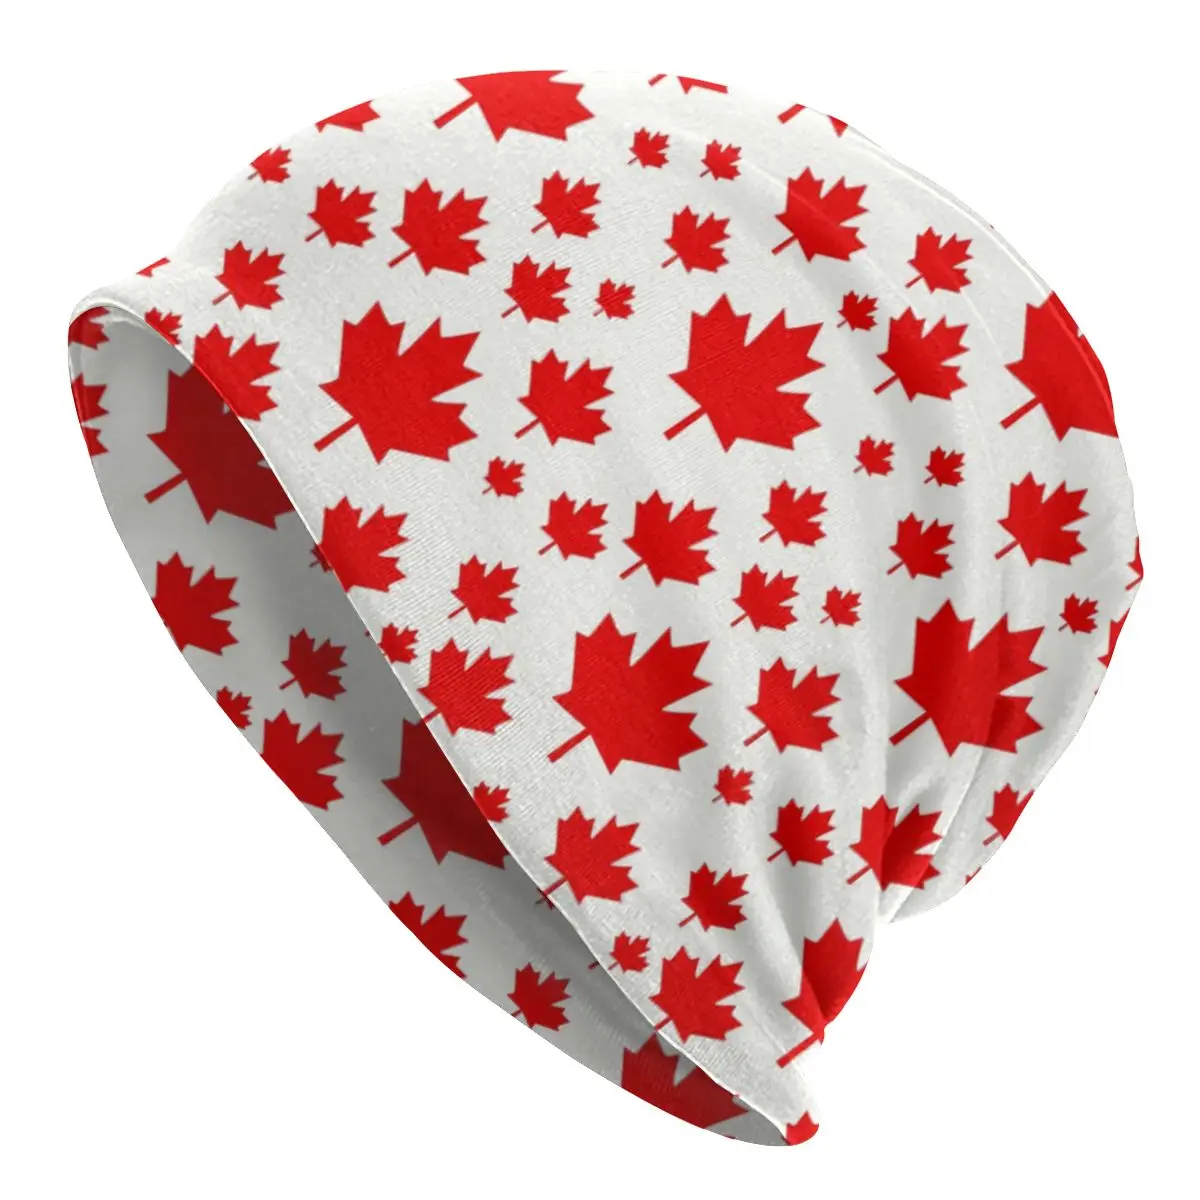 

Canada Maple Leaf Flag Emblem Unisex Winter Warm Bonnet Homme Knitting Hats Beanie Cap Outdoor Ski Beanies Caps For Men Women